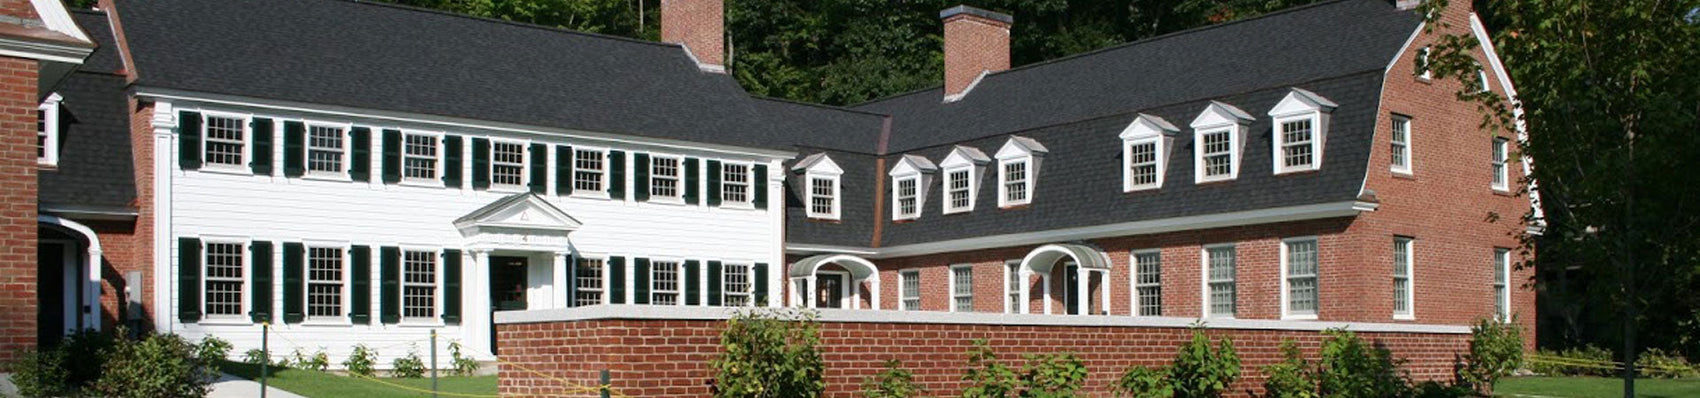 Hanover, NH: Dartmouth College Dormitory Retrofit